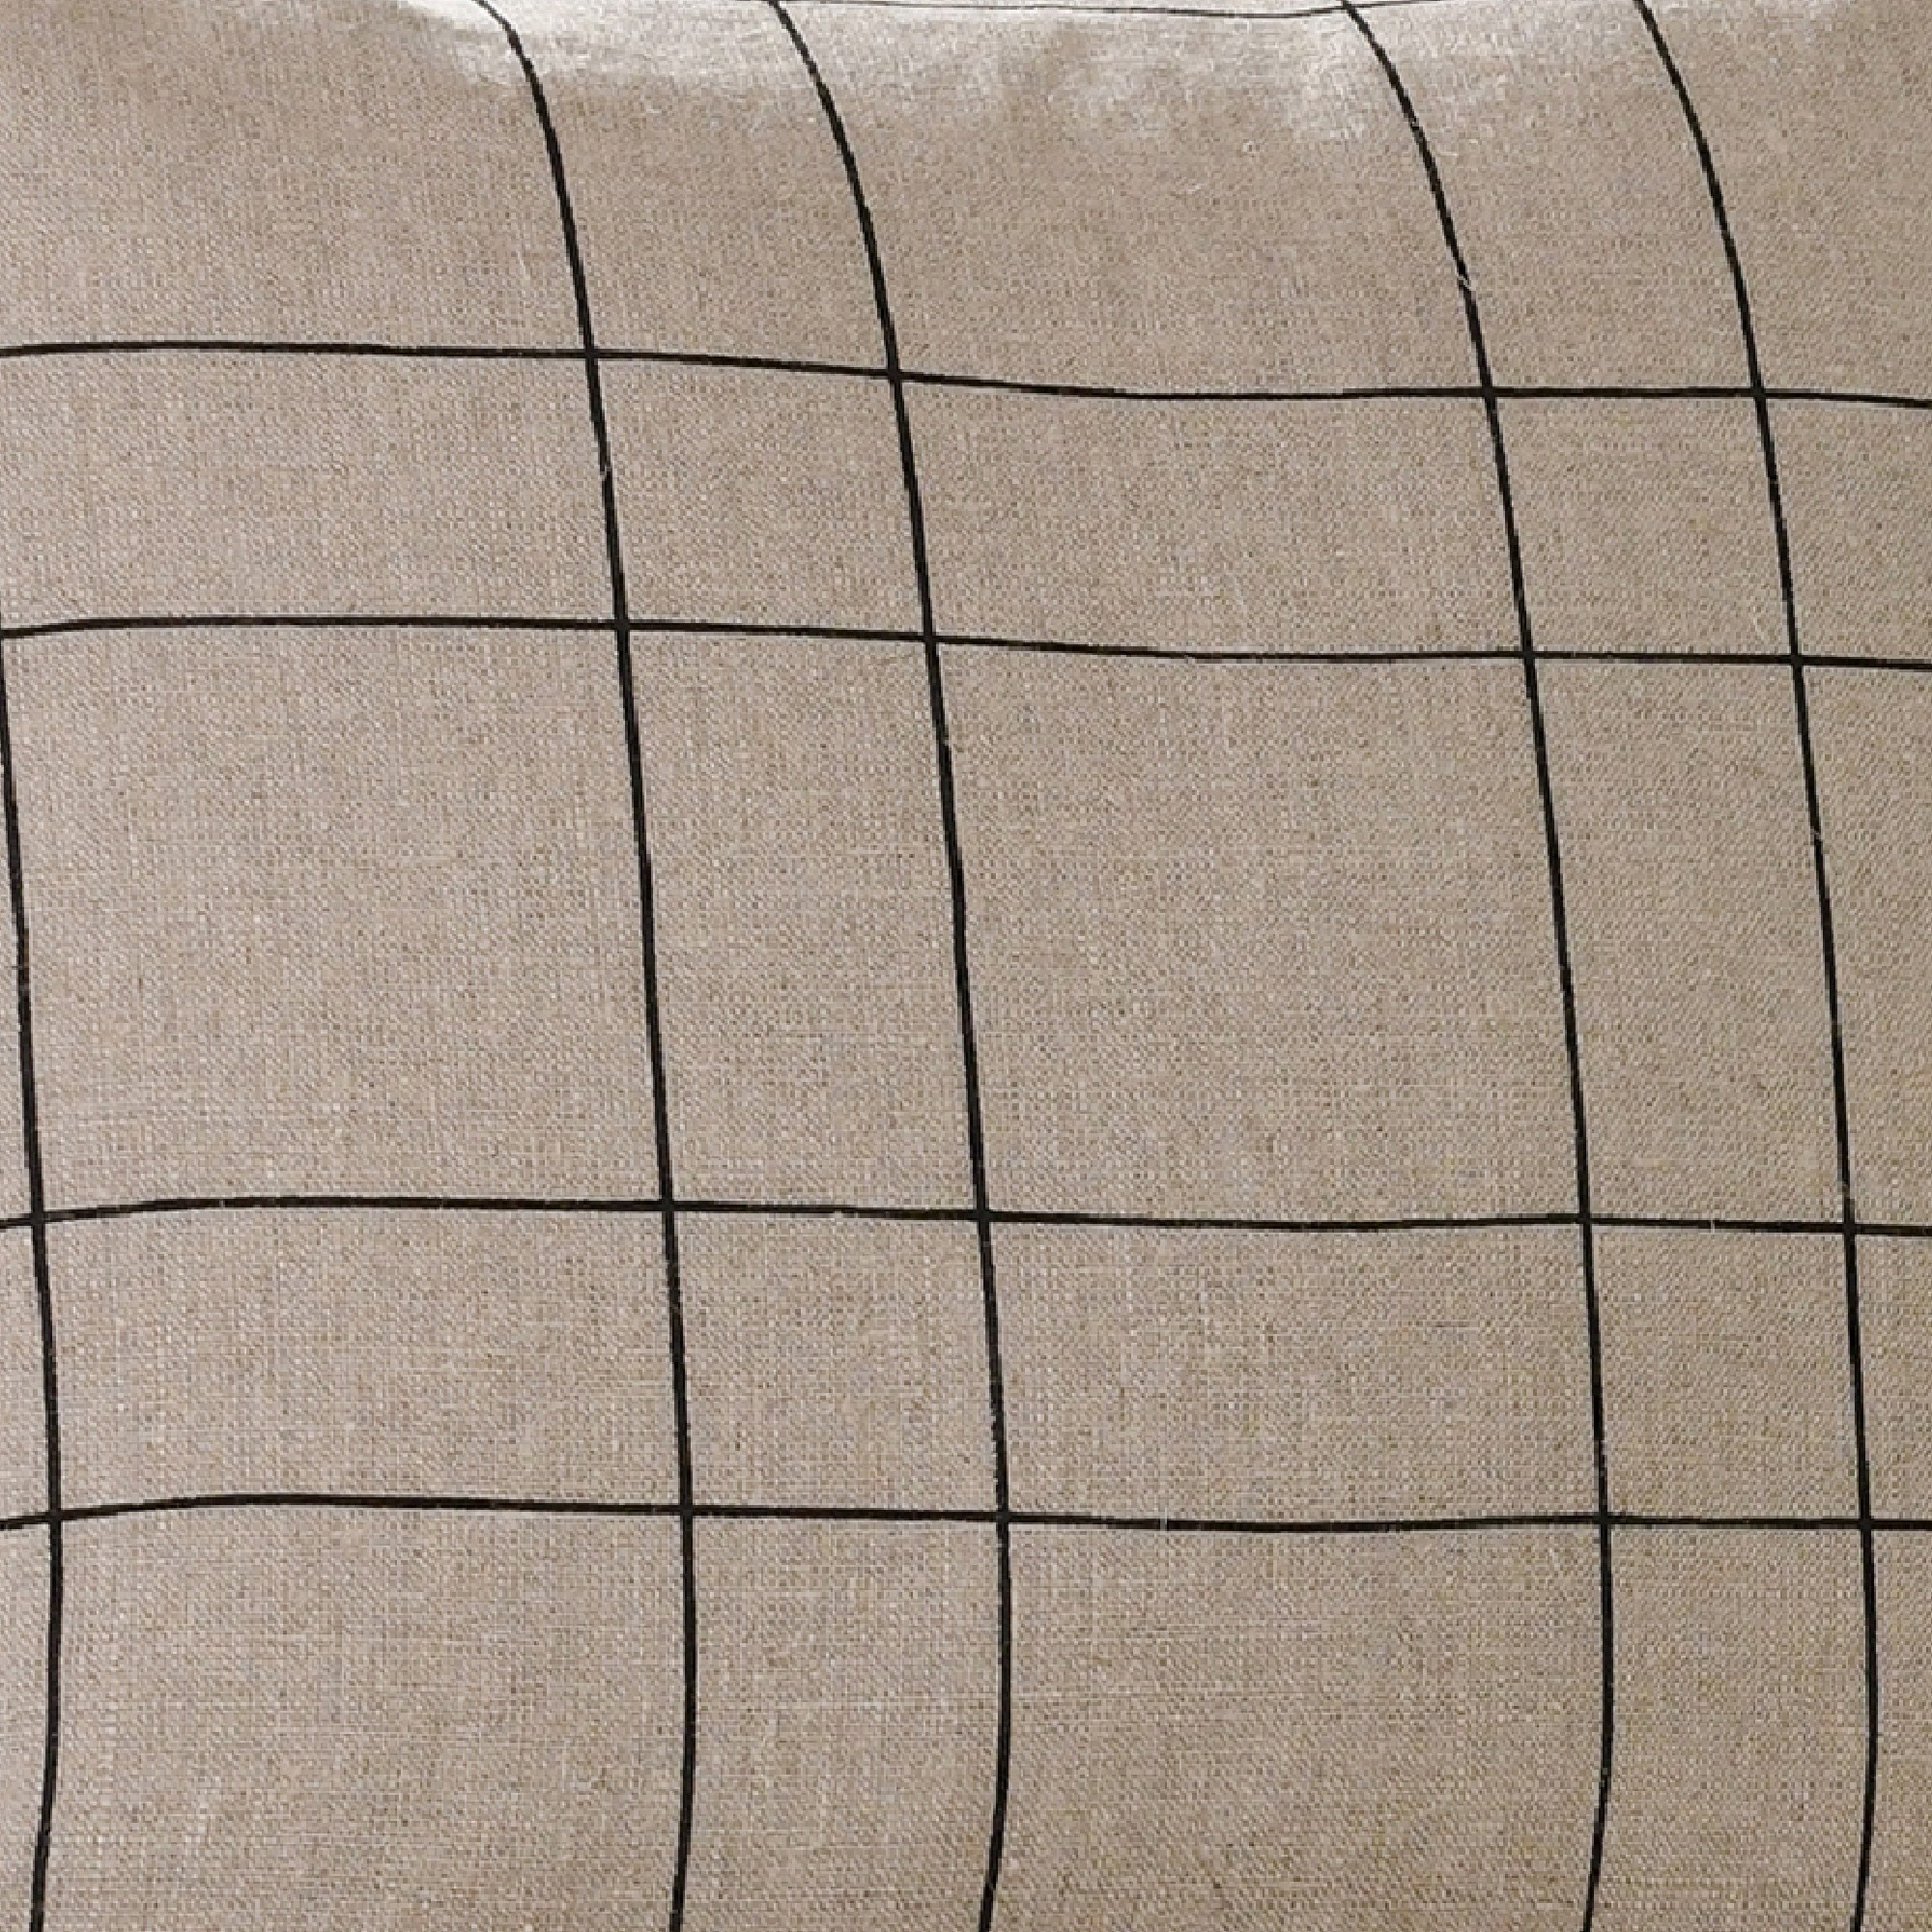 26 Inch Square Linen Accent Throw Pillow, Simple Plaid Lines, Beige, Black- Saltoro Sherpi